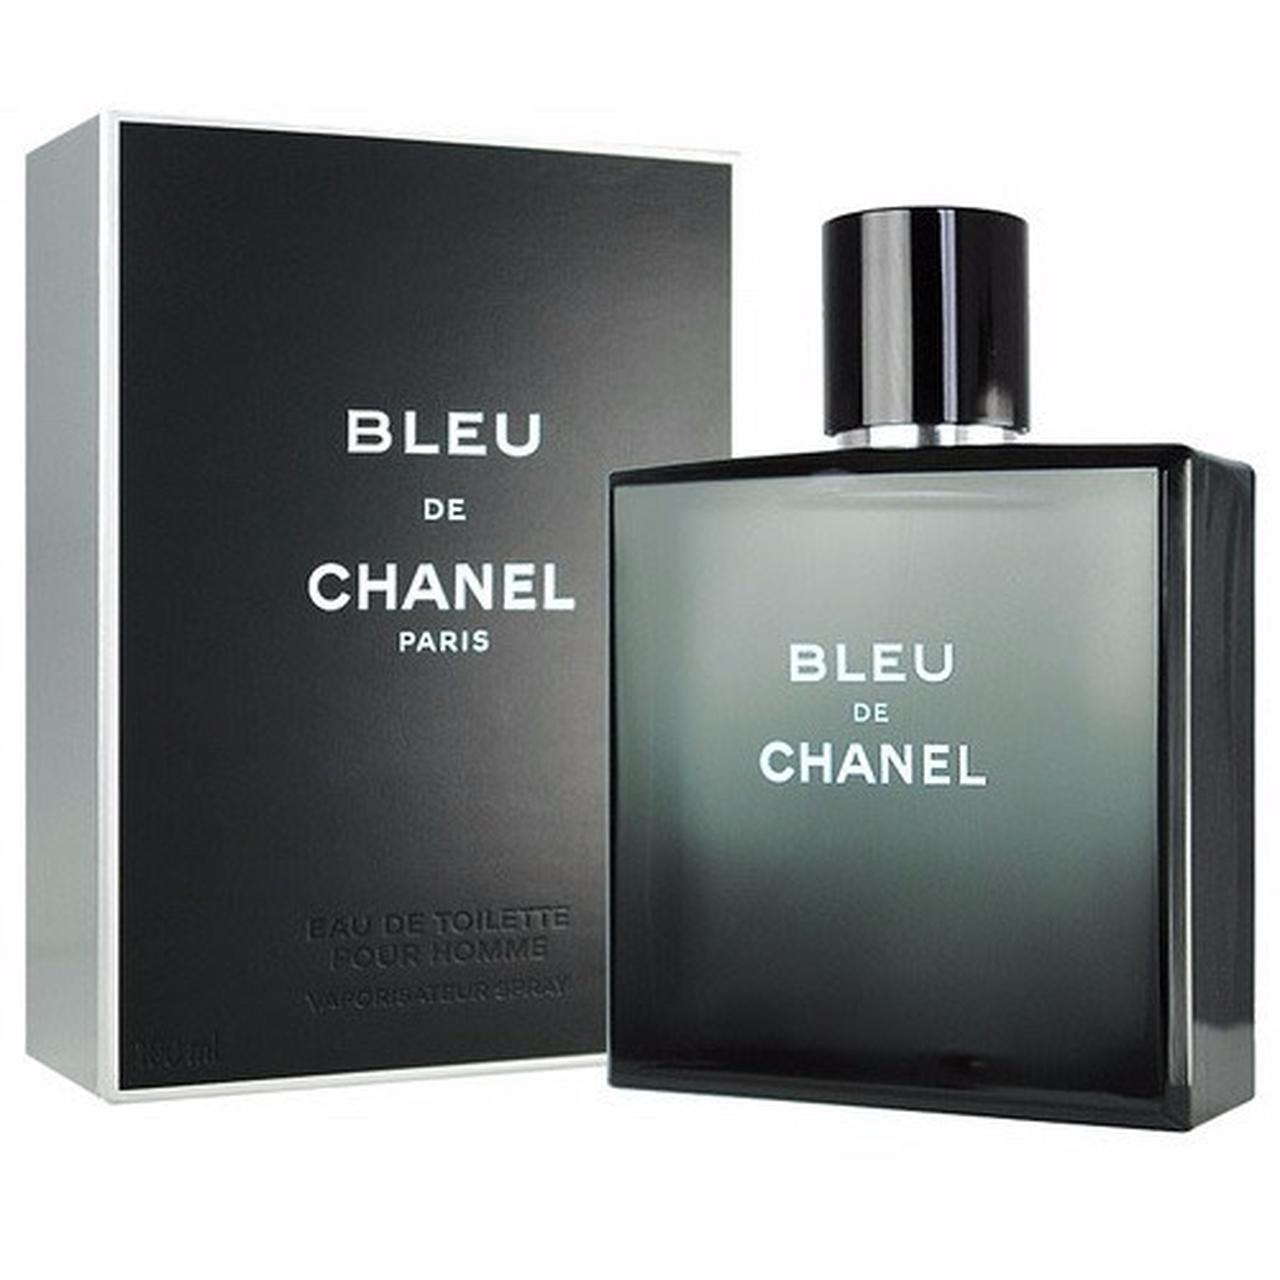 chanel bleu de chanel men's perfume 3.4 oz